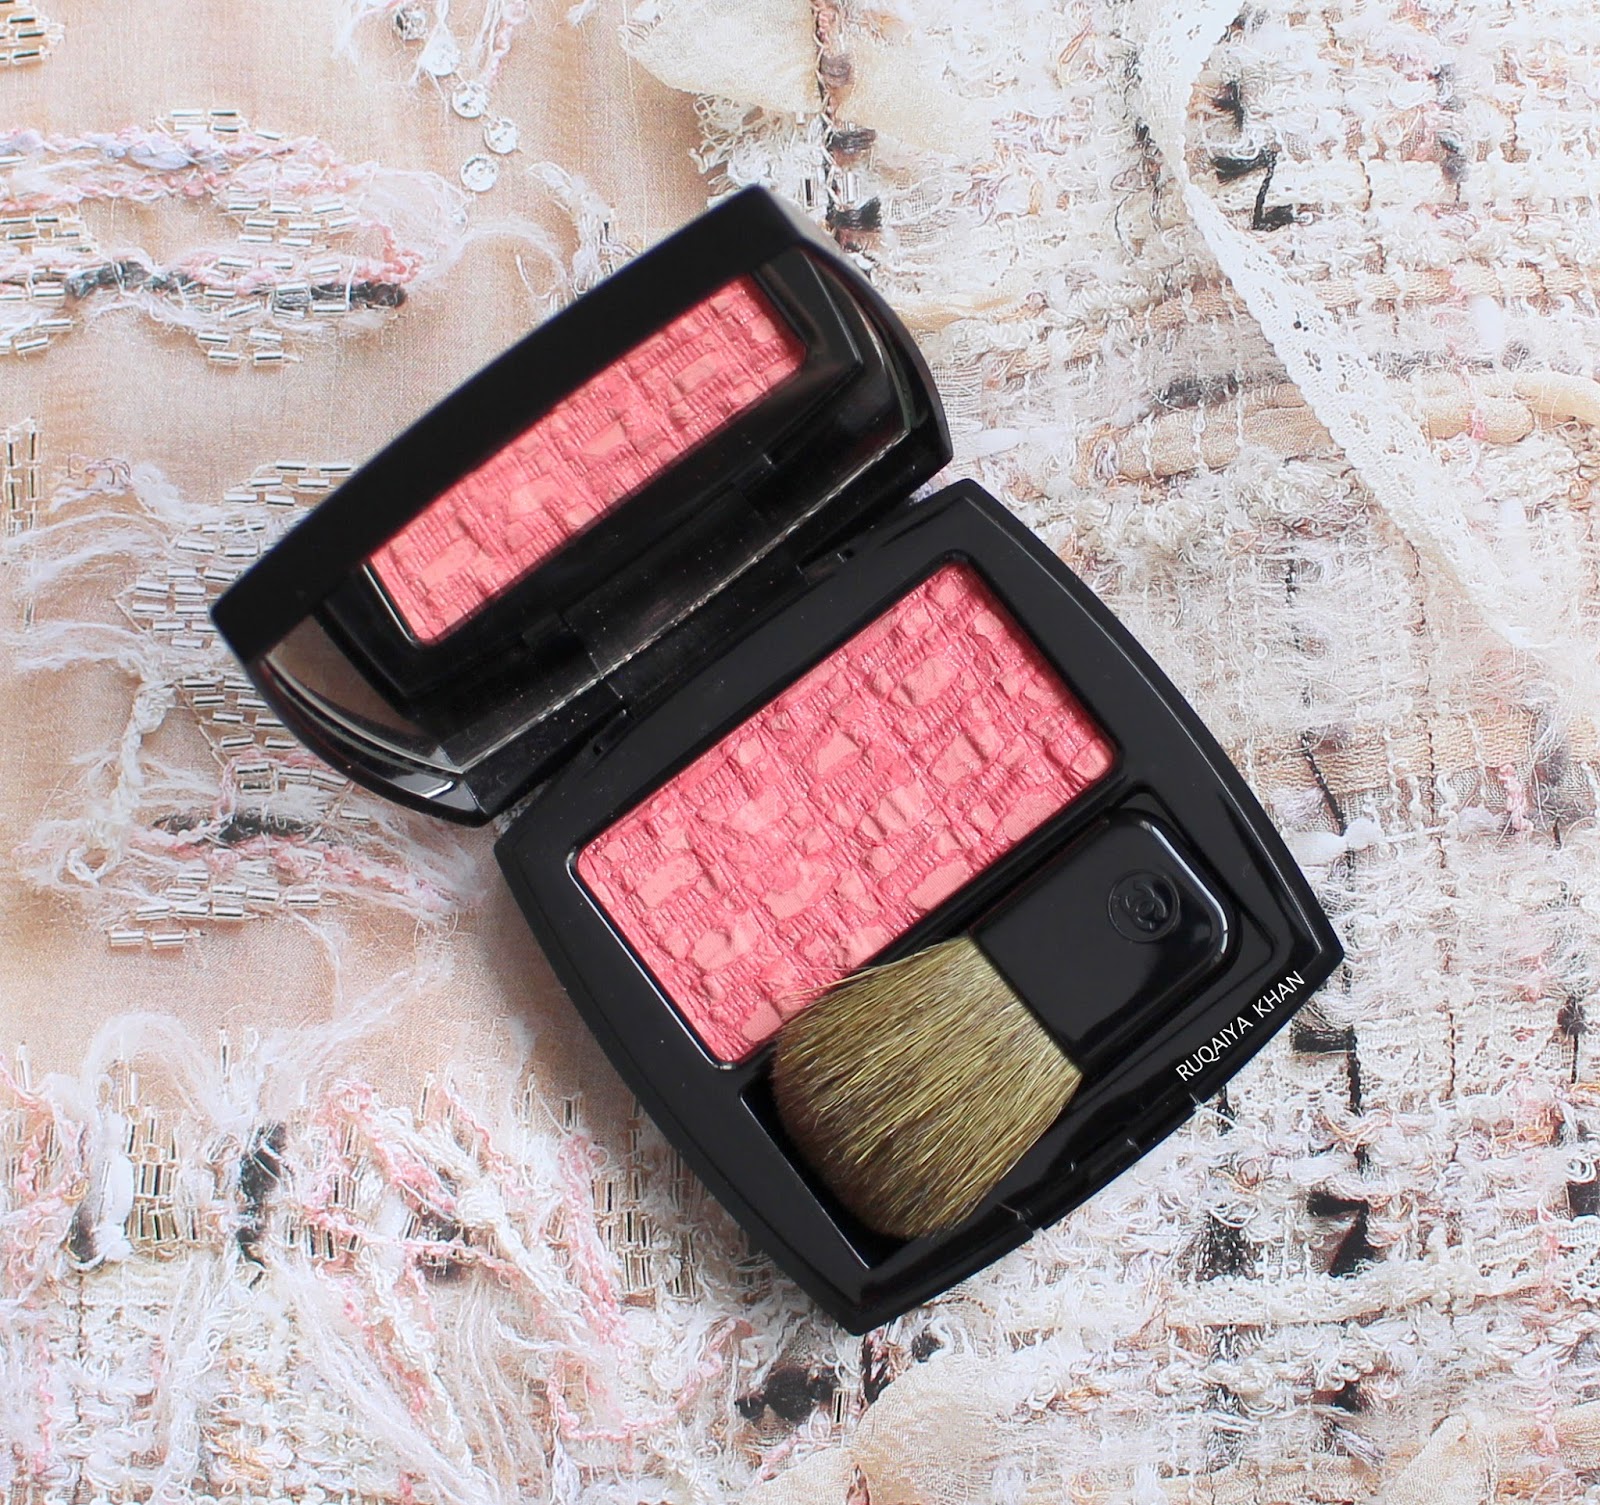 Review: Makeup: Chanel Tweed Duo Blush - Tweed Corail - My Women Stuff